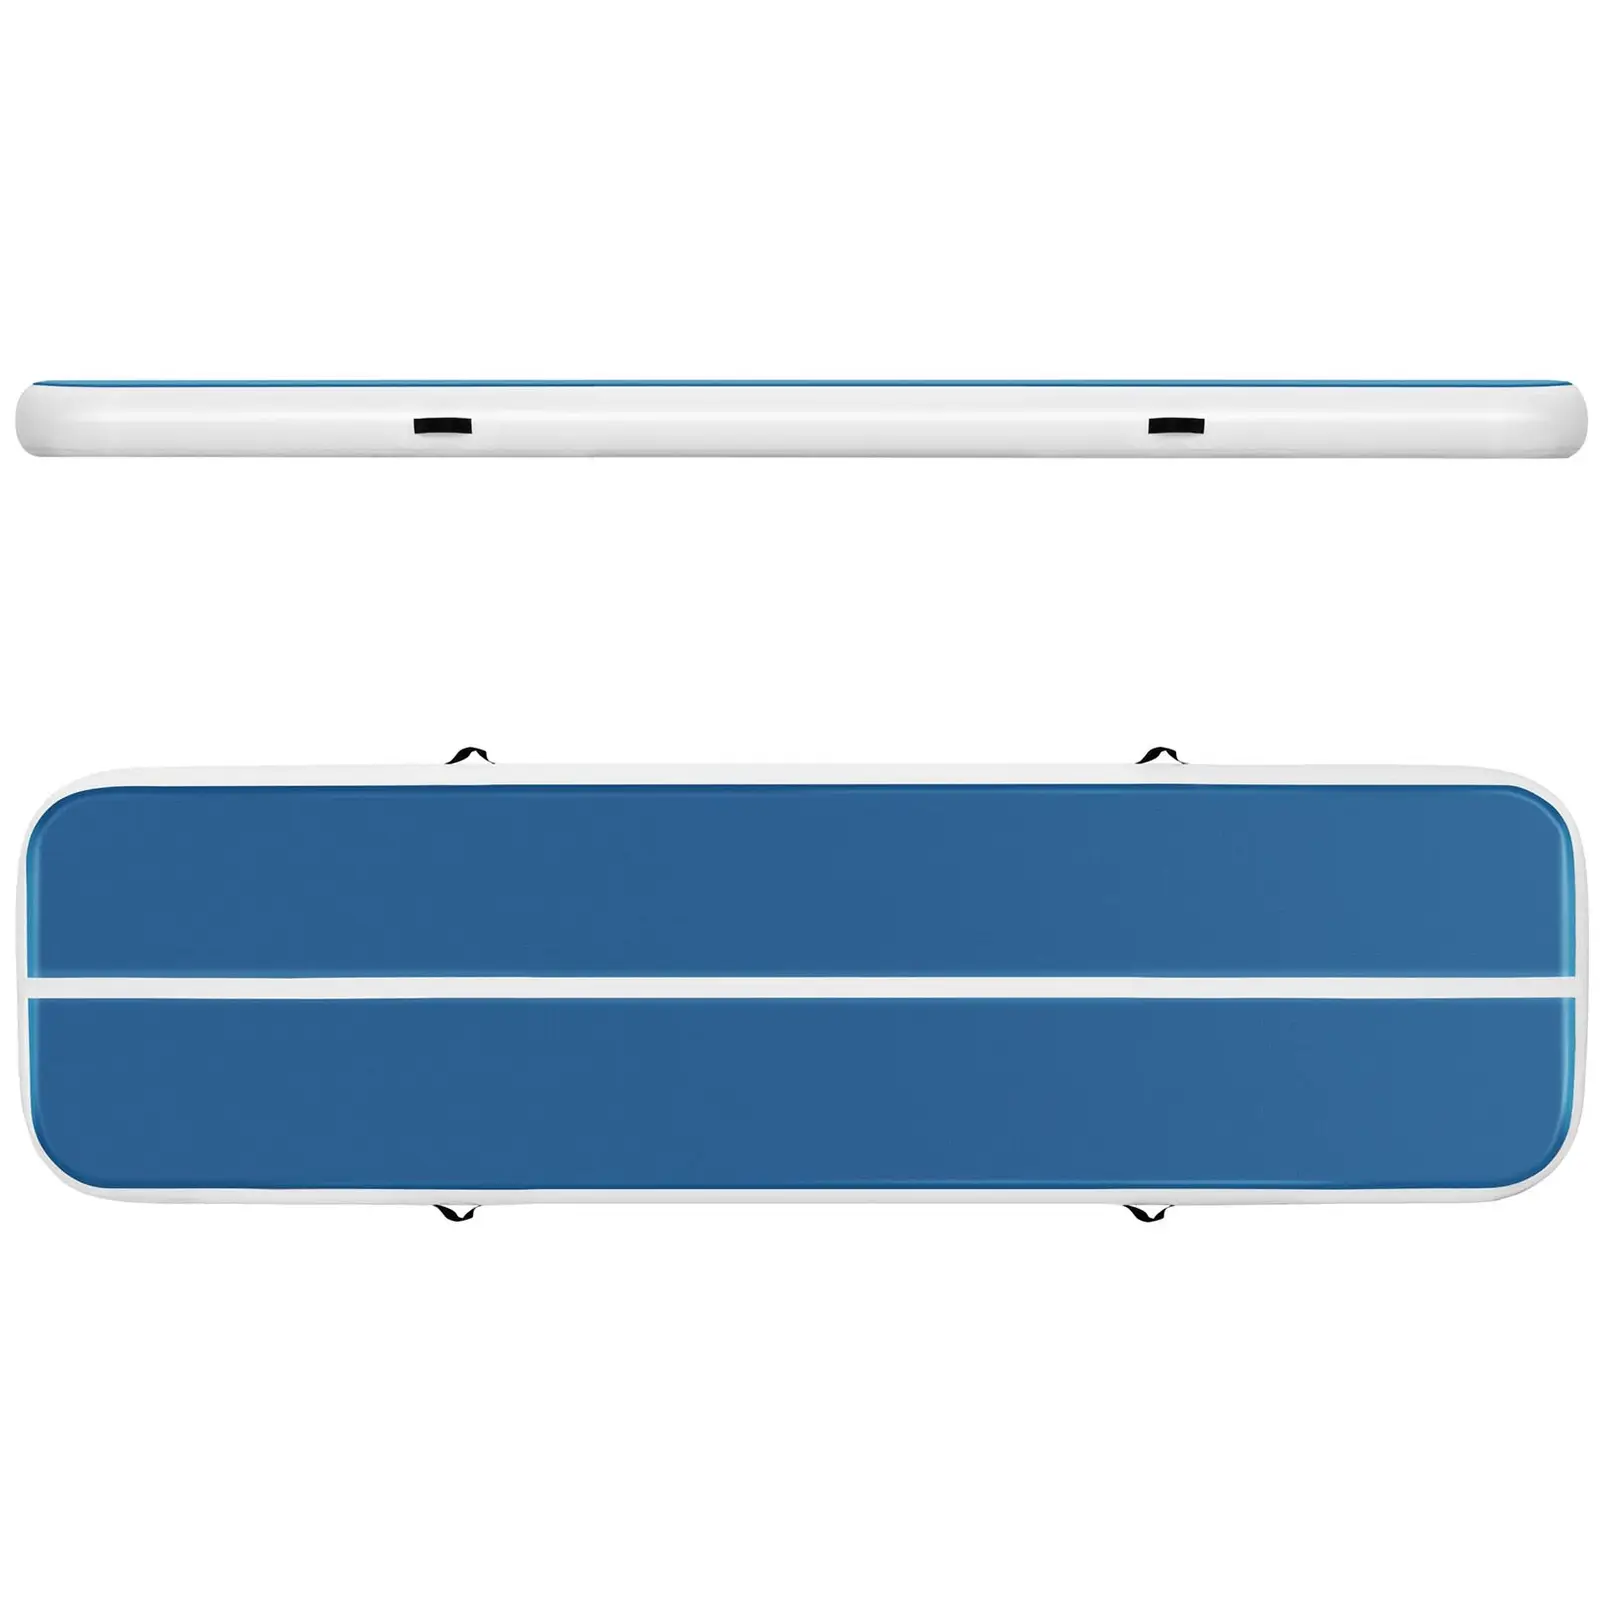 Uppblåsbar gymnastikmatta med elektrisk luftpump - 400 x 100 x 20 cm - 200 kg - blå / vit